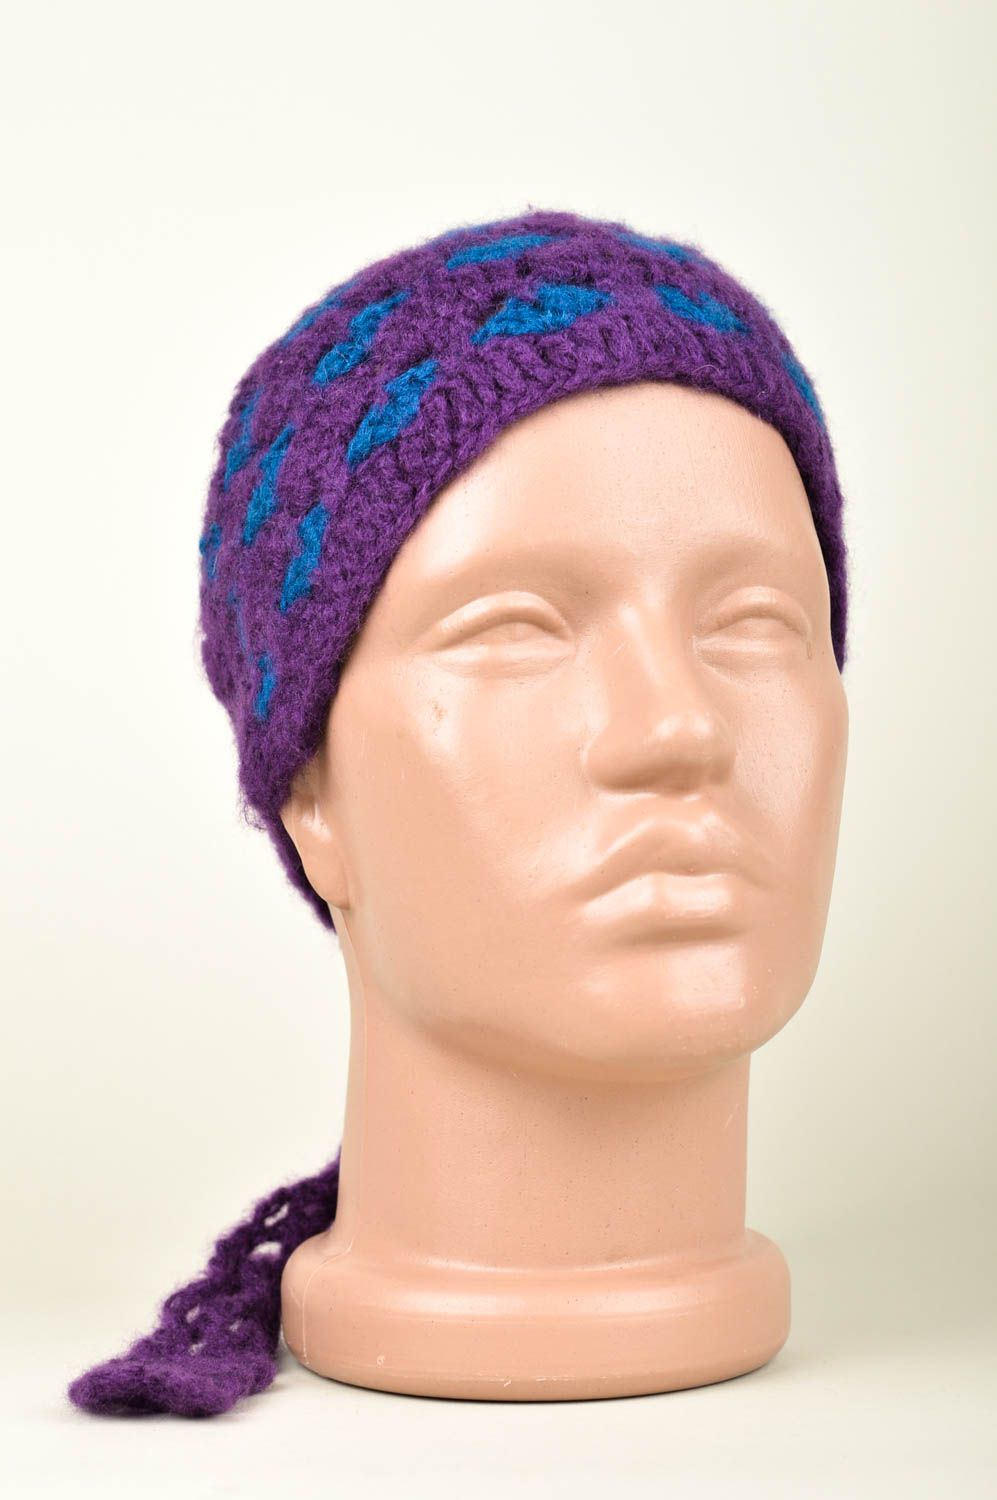 Handmade crochet headband crochet ideas head accessories for kids small gifts photo 1